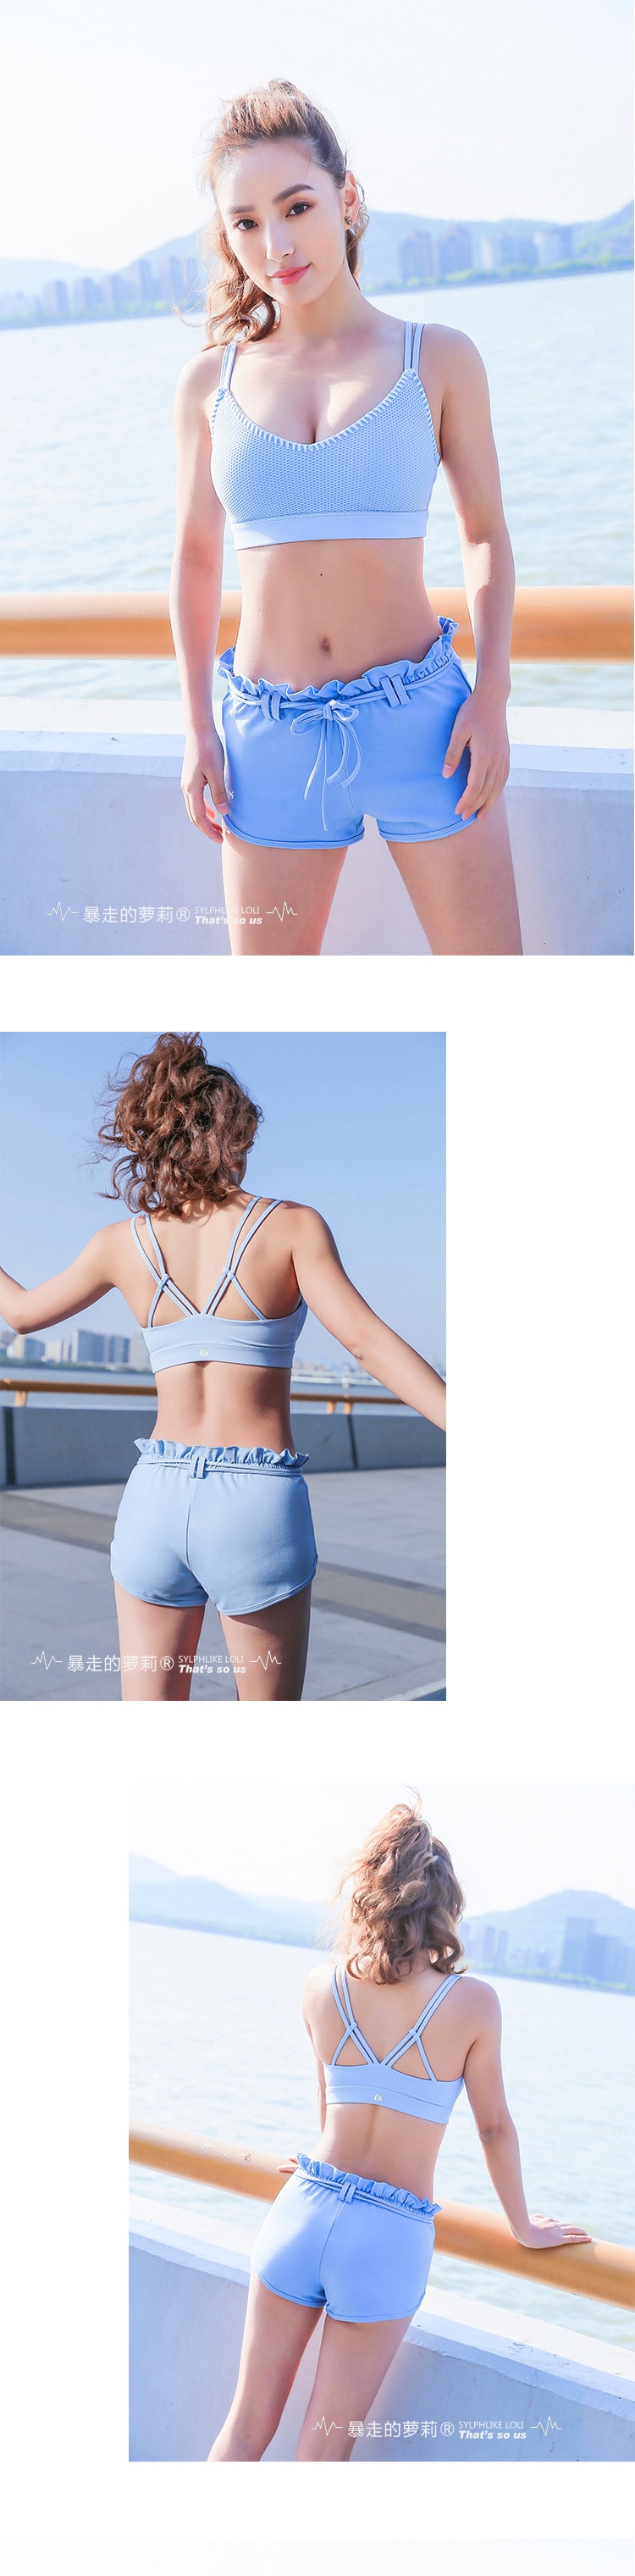 Sports Double Shoulder Bra For Yoga Fitness Train/Blue#/M